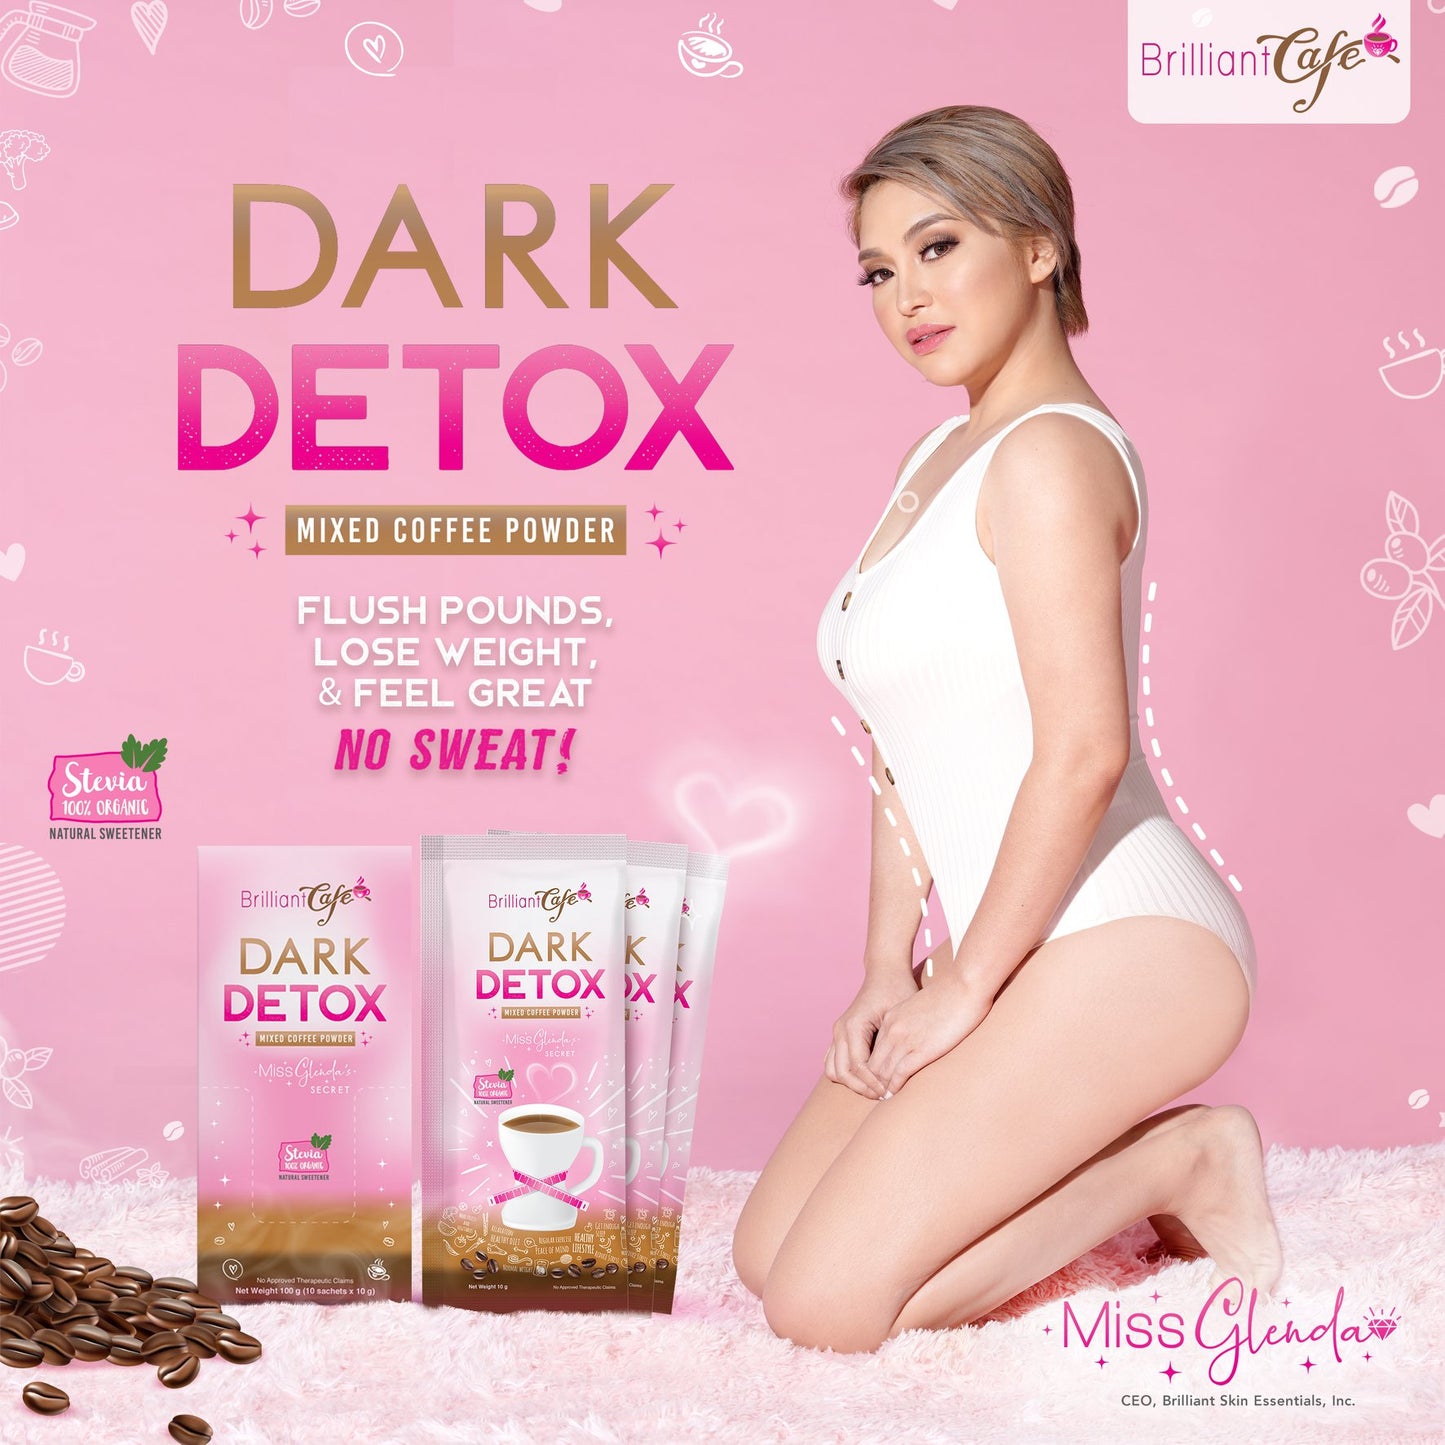 Brilliant Café Dark Detox Mixed Coffee Powder